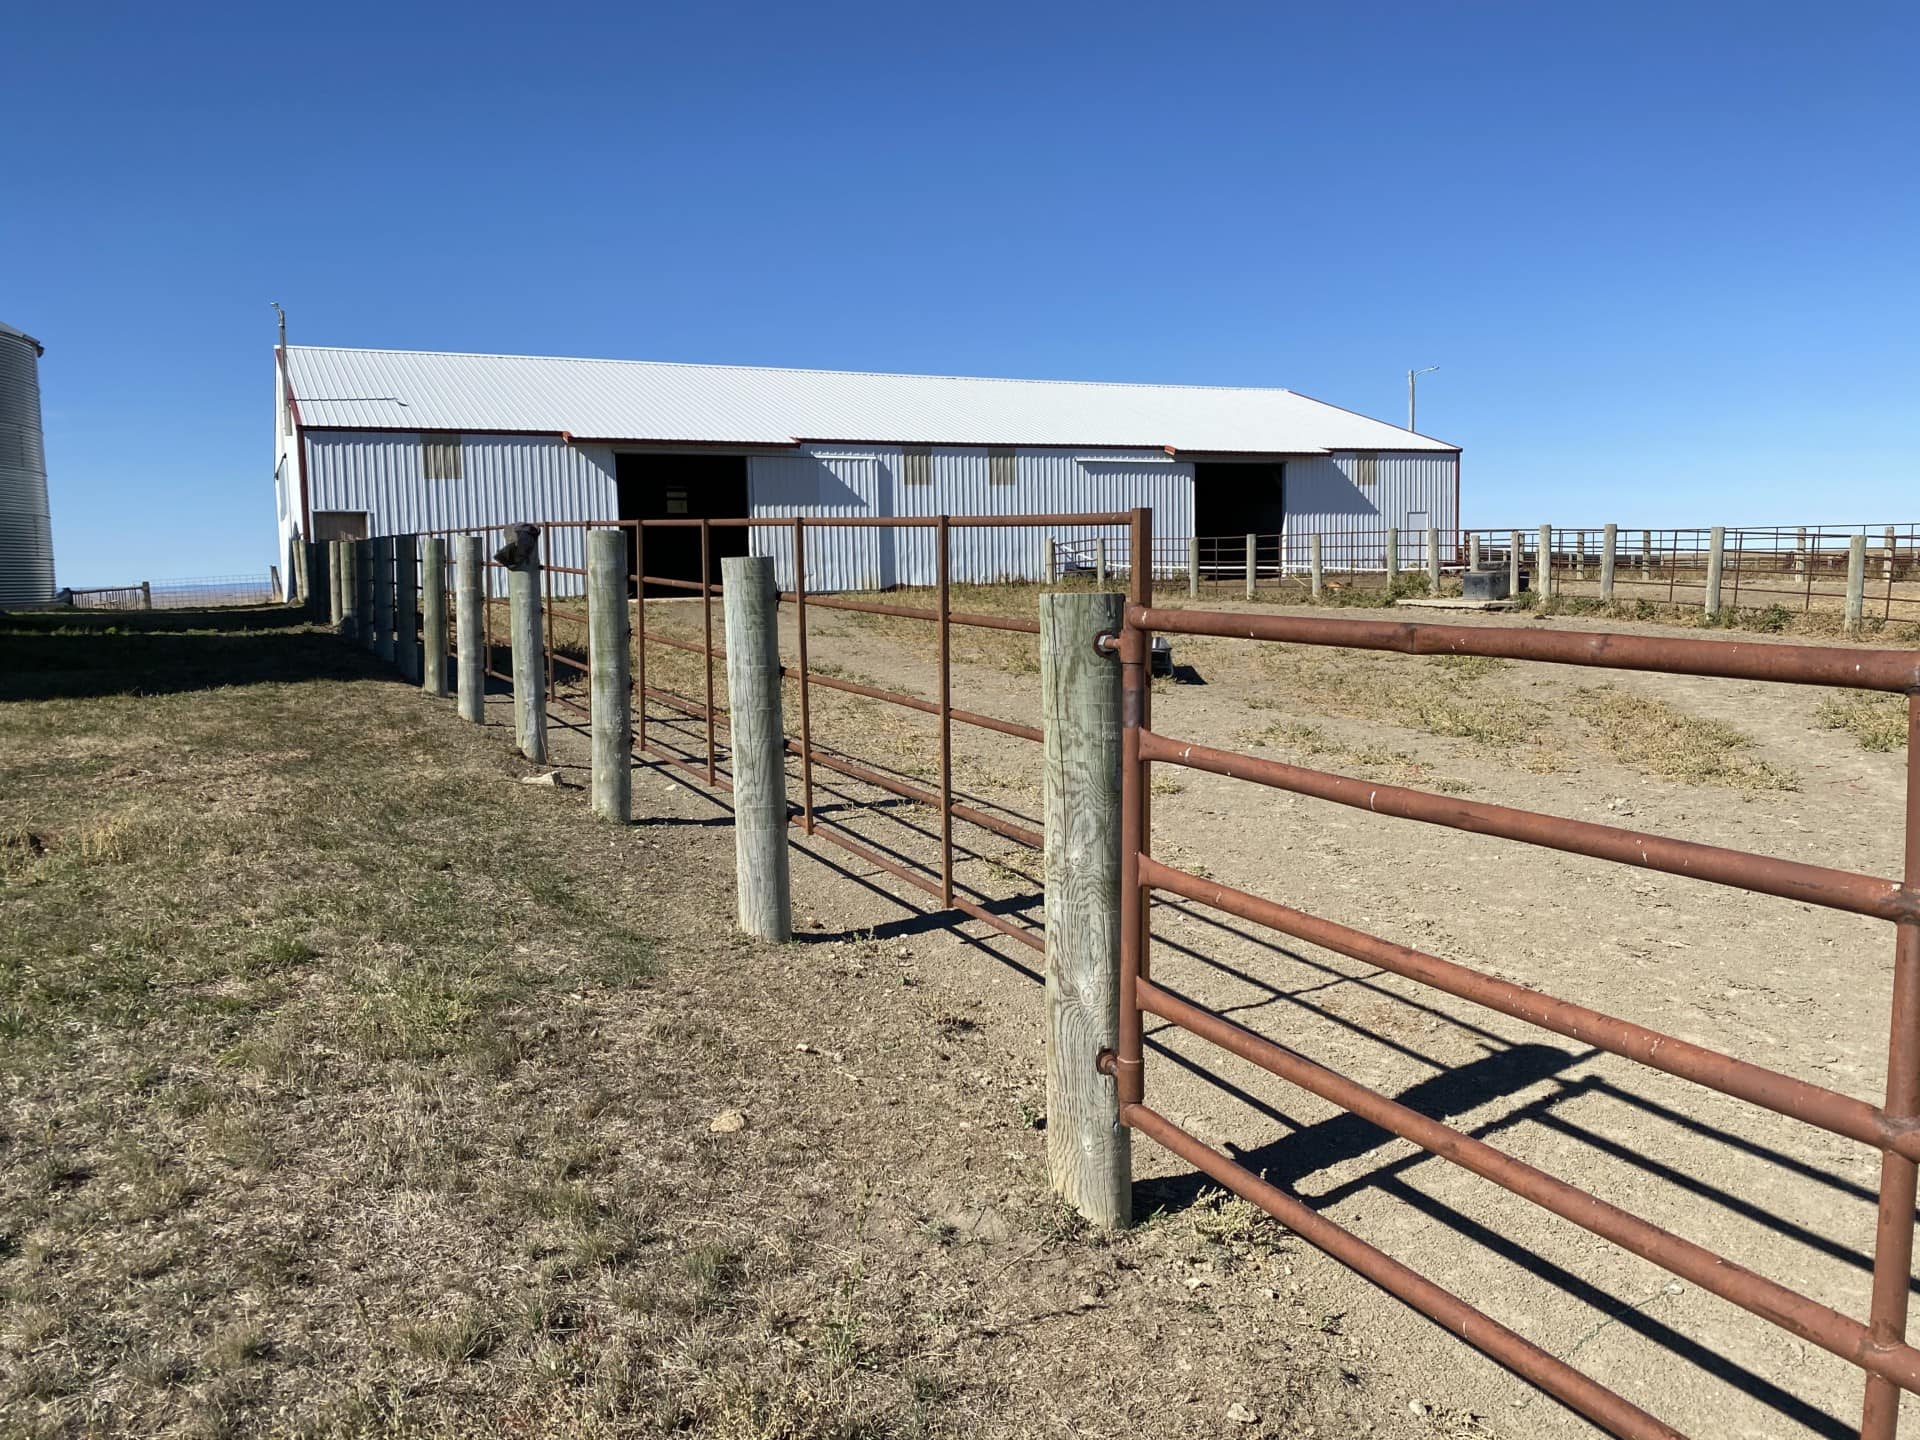 barn cattle pens south dakota northern plains grassland cattle ranch